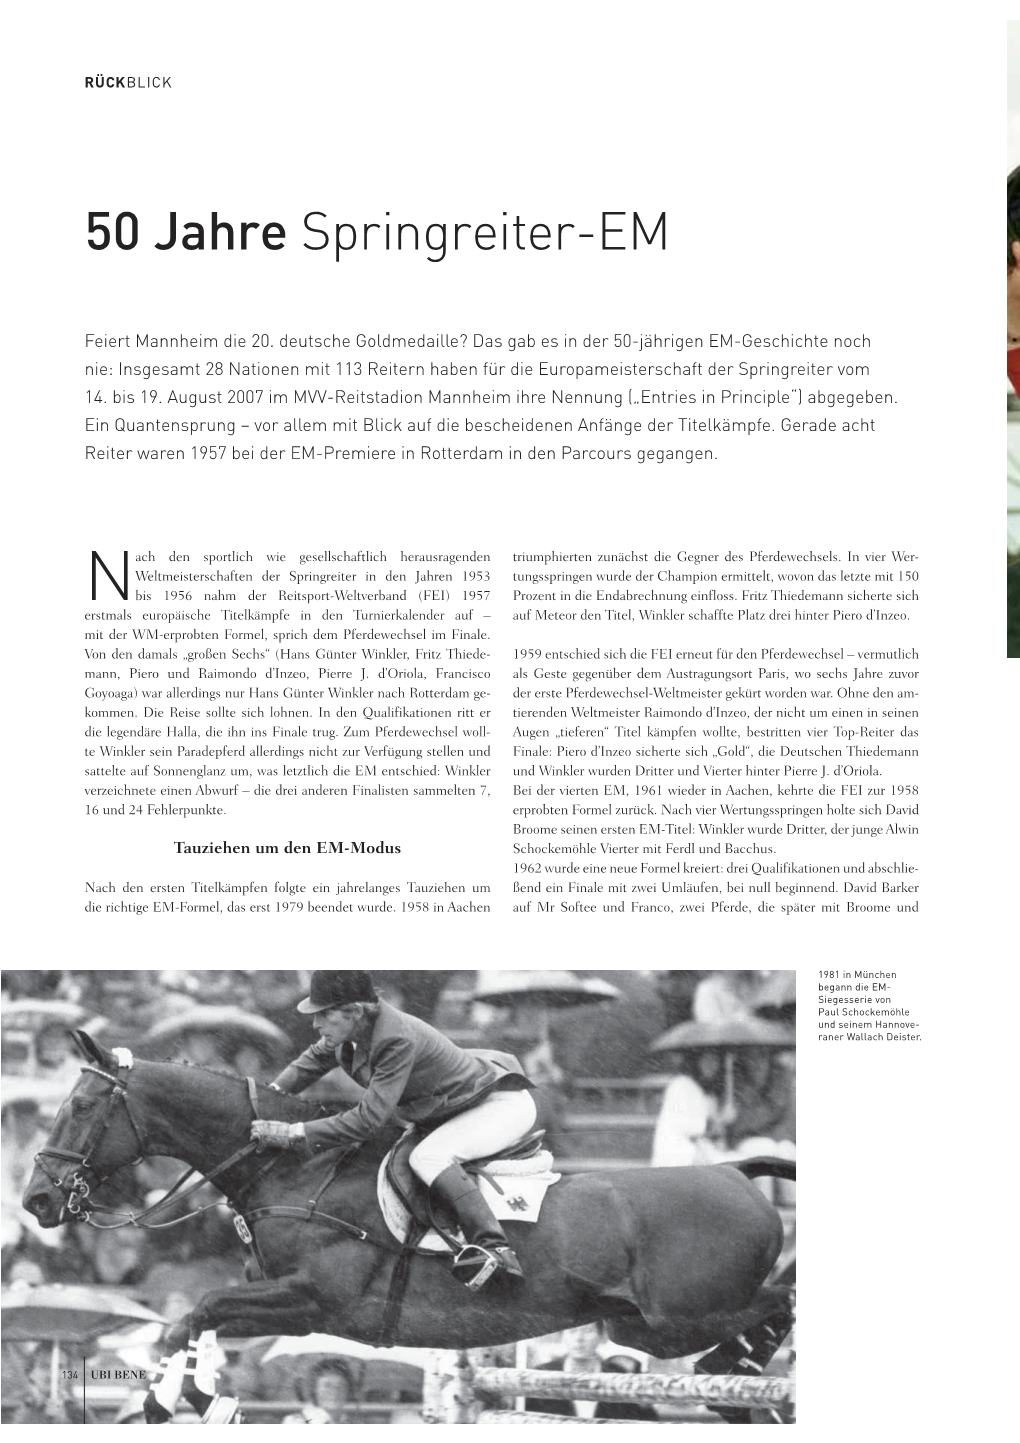 50 Jahre Springreiter-EM